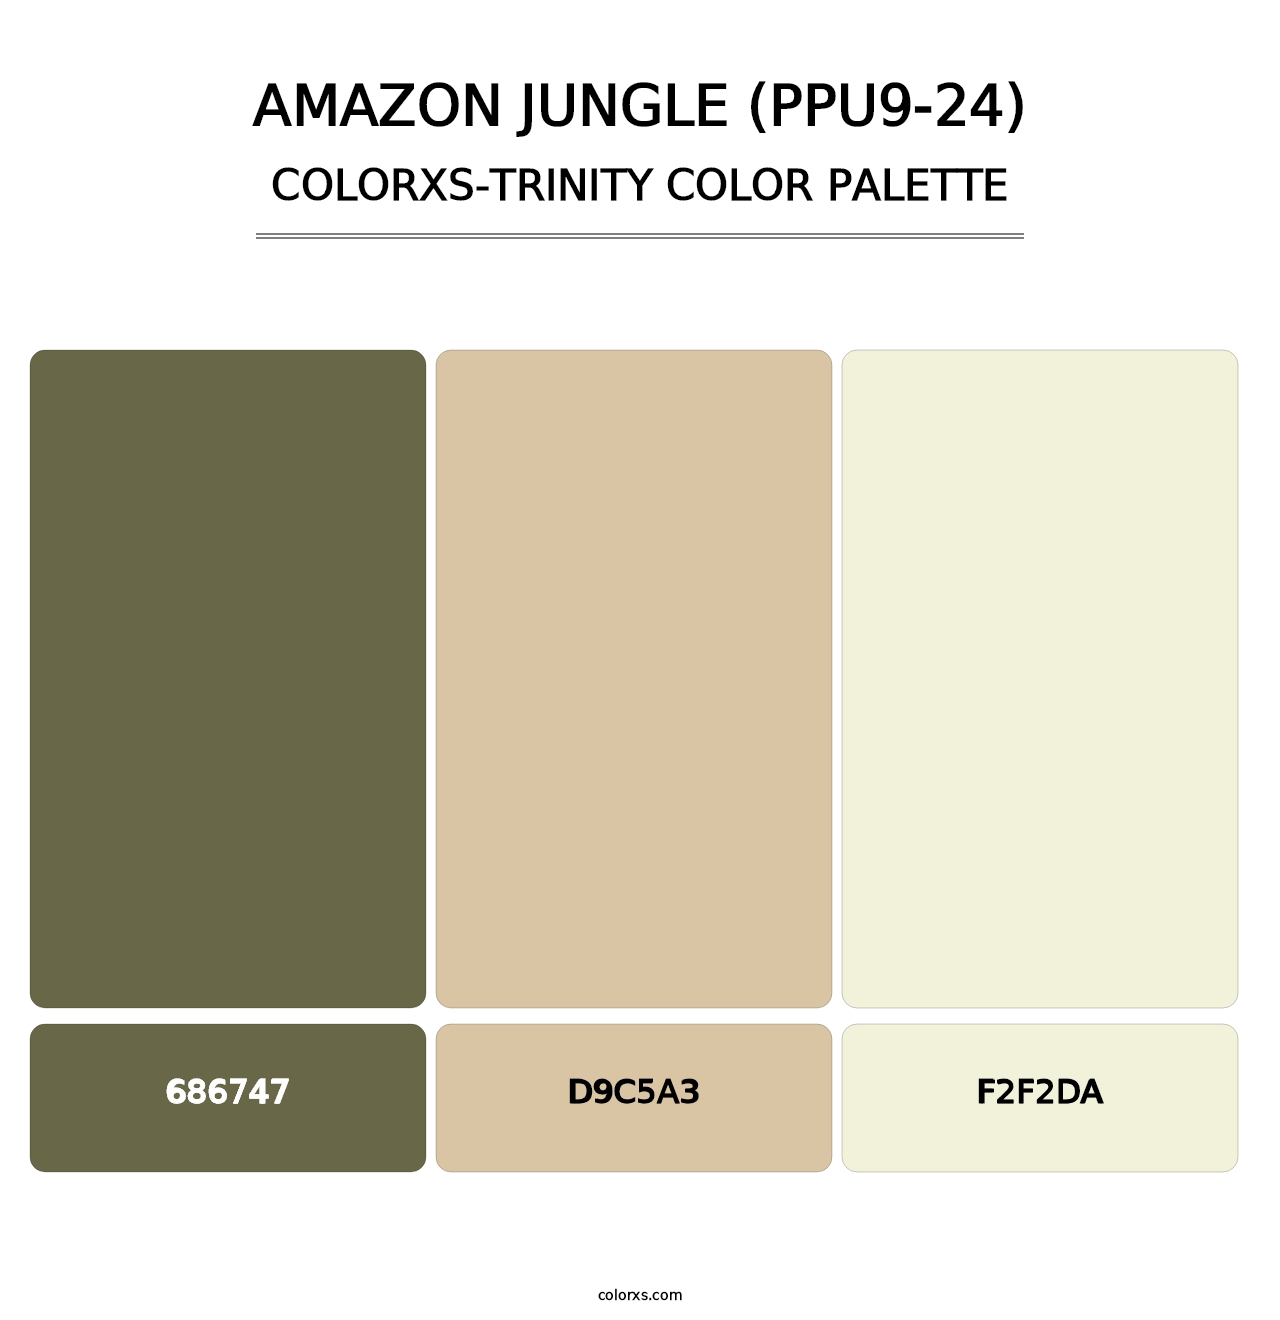 Amazon Jungle (PPU9-24) - Colorxs Trinity Palette